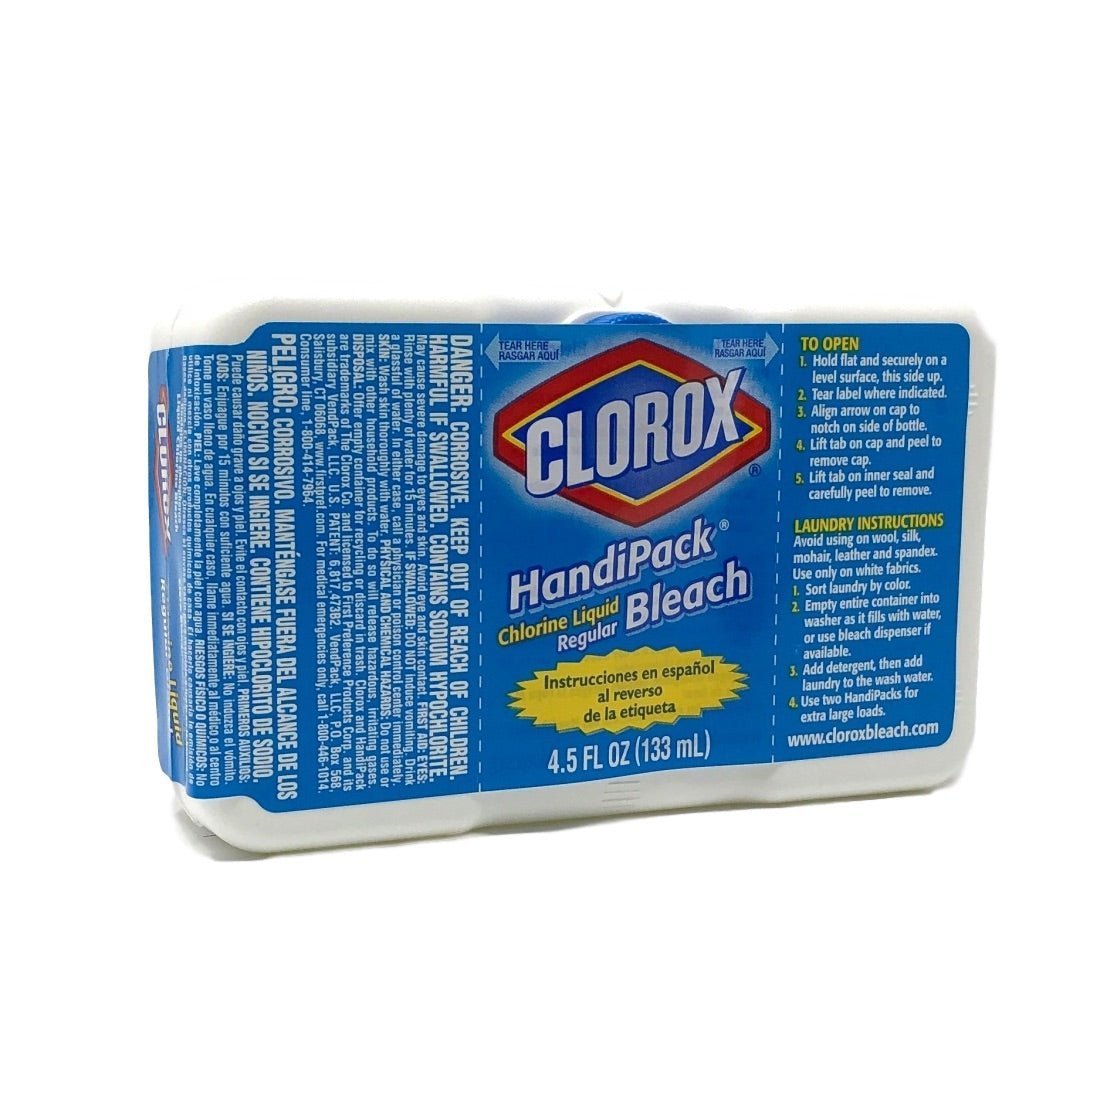 Clorox 2 Powder Laundry Detergent - Coin Vending